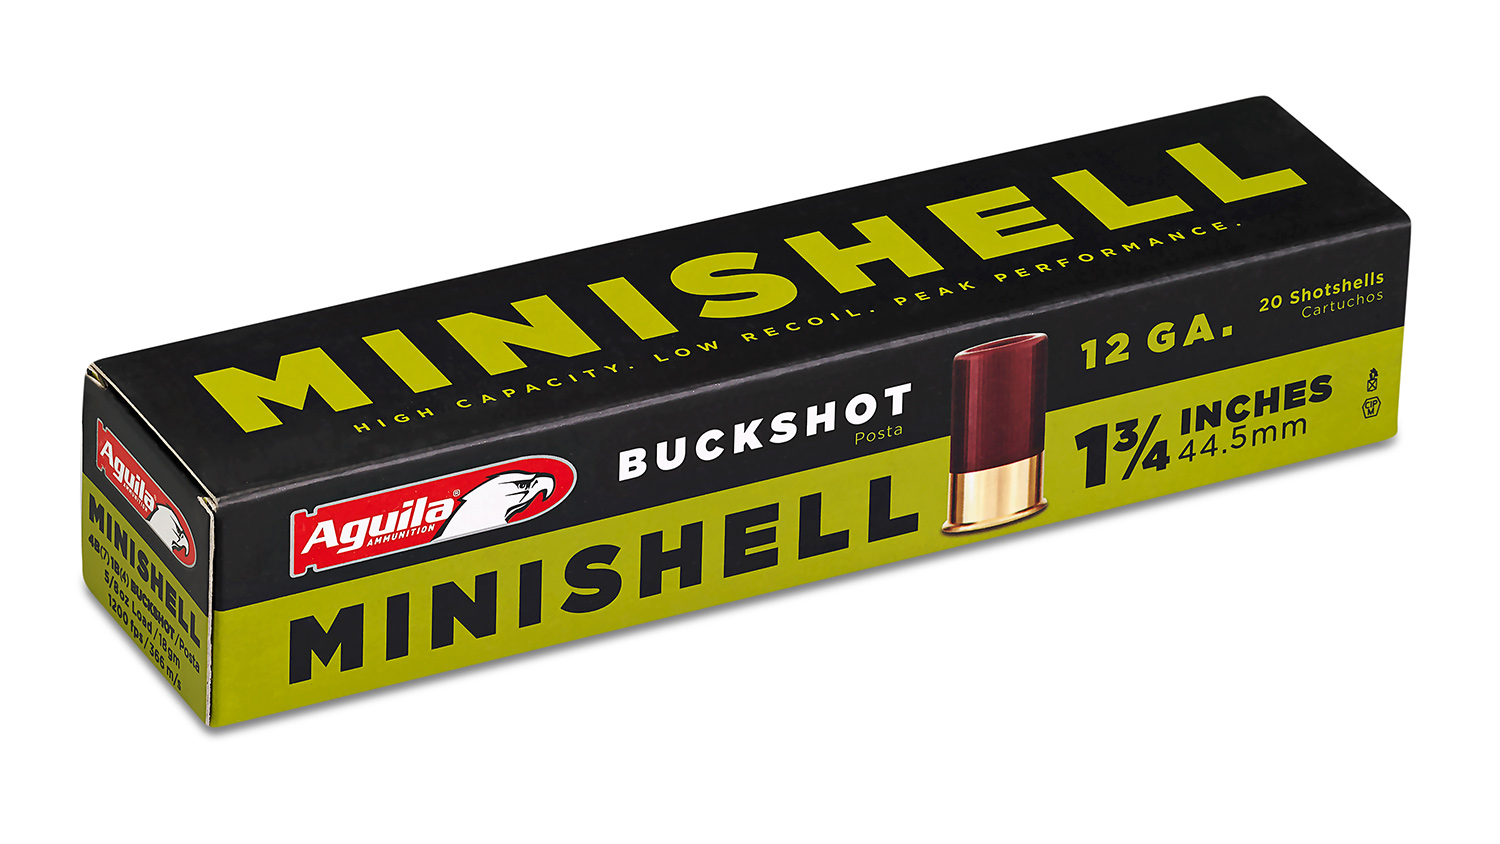 Aguila Minishell Buckshot 12-Gauge 1¾-inches